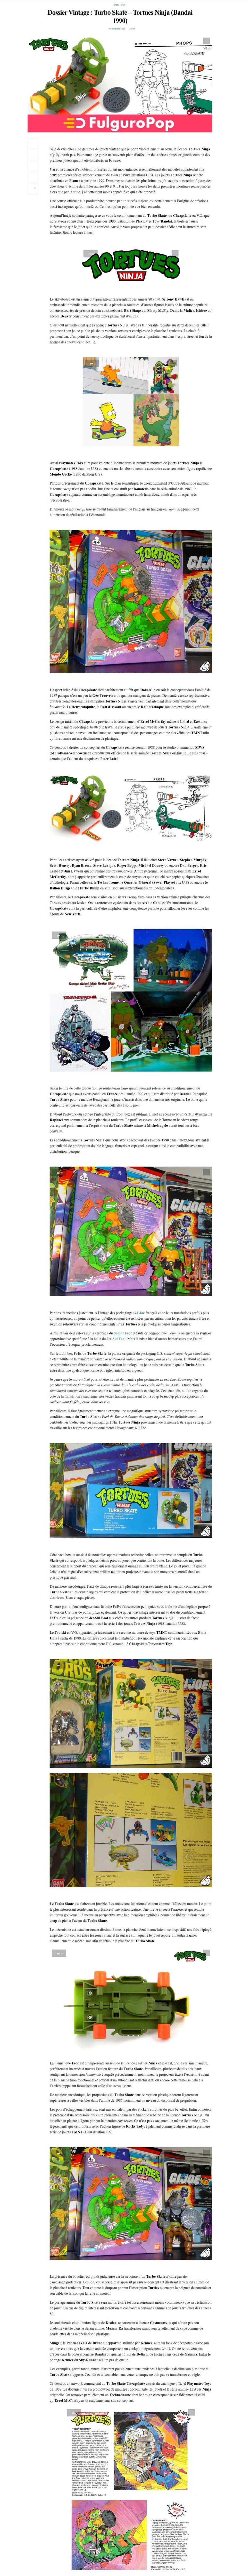 Les Tortues Ninja - Gamme Playmates Bandaï 1988 - 1998 - Page 3 Articl23